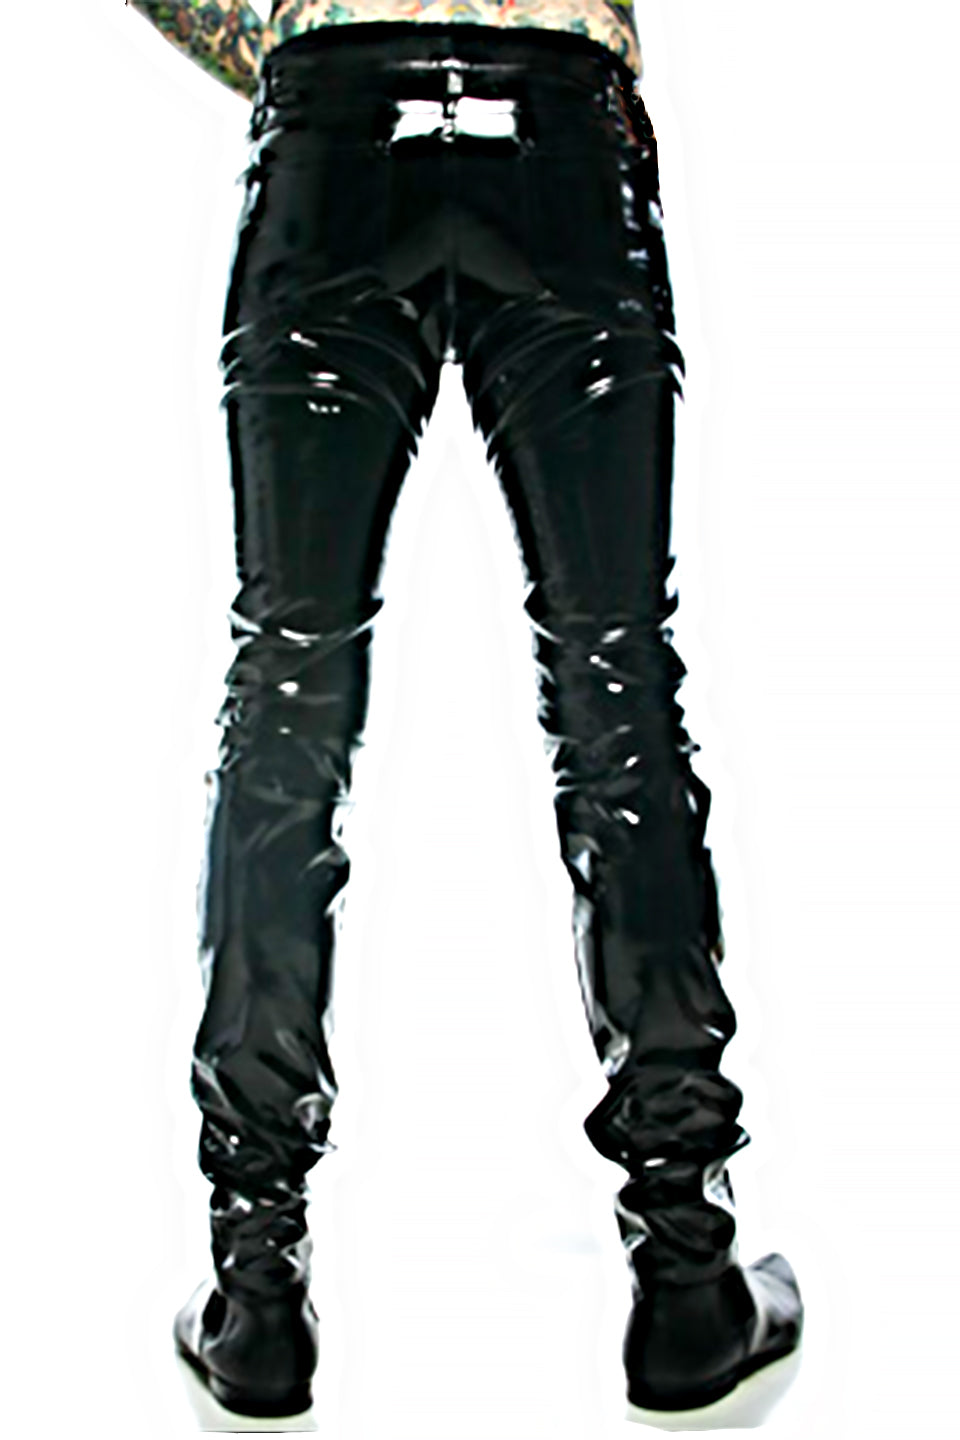 Heavy PVC Pants - Front Zippers